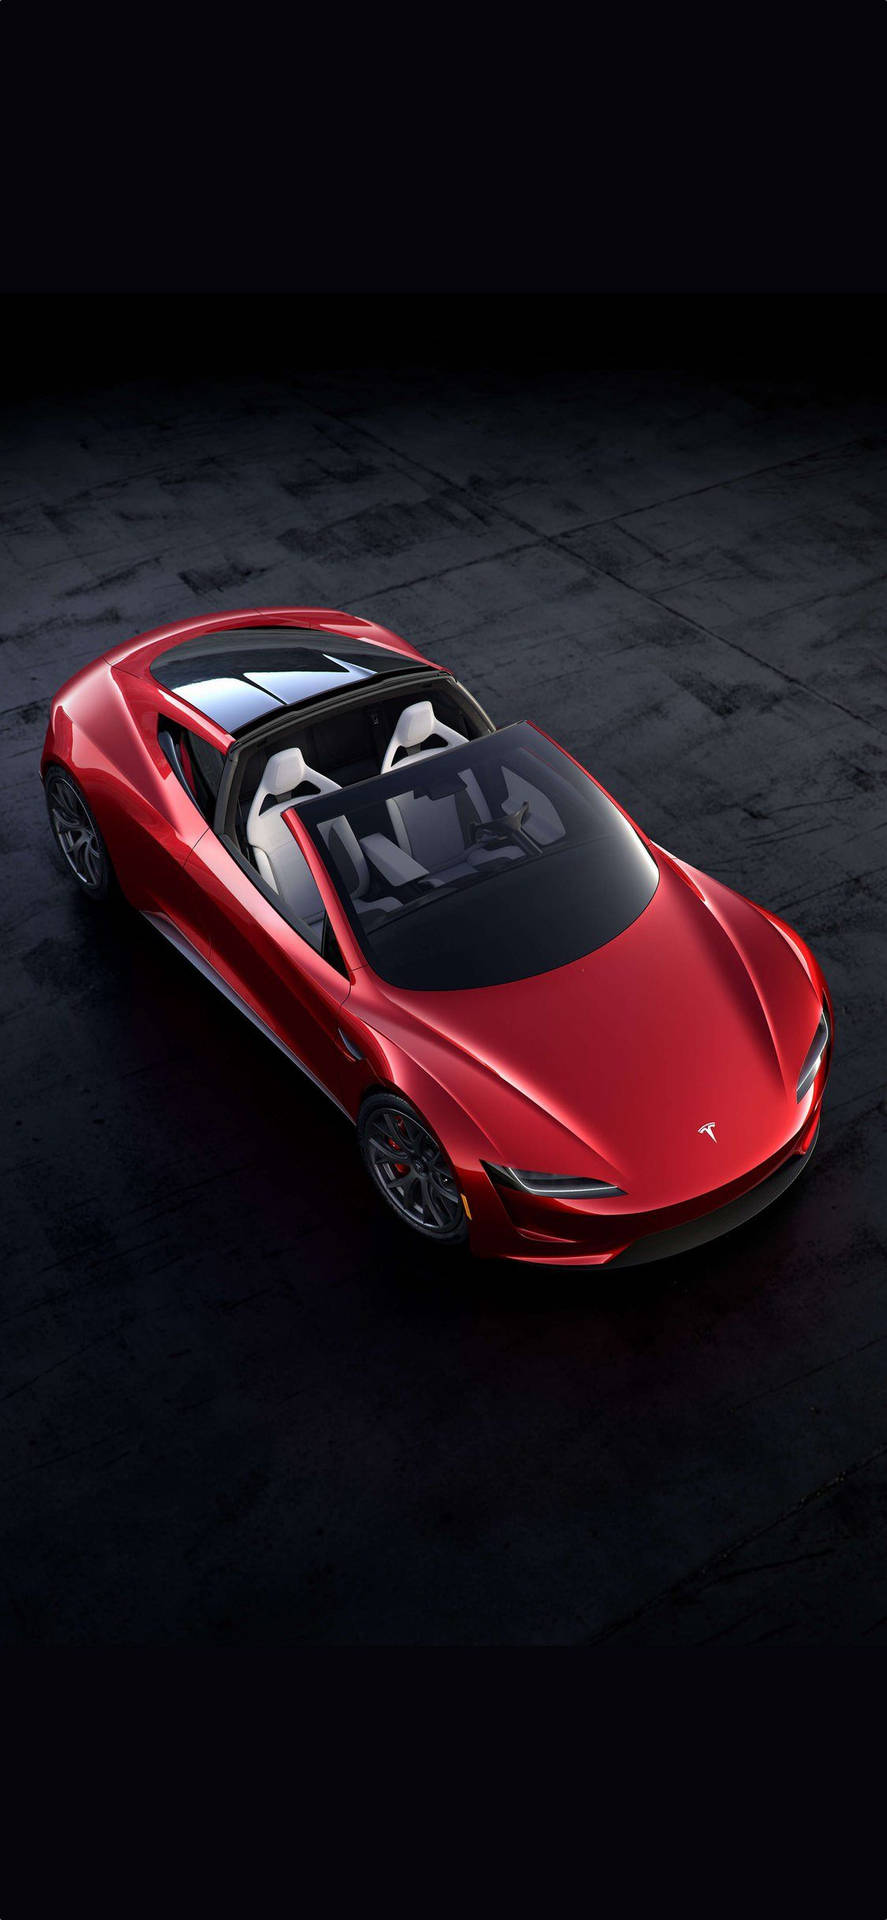 Macchina Tesla Roadster Rossa Per Iphone Sfondo